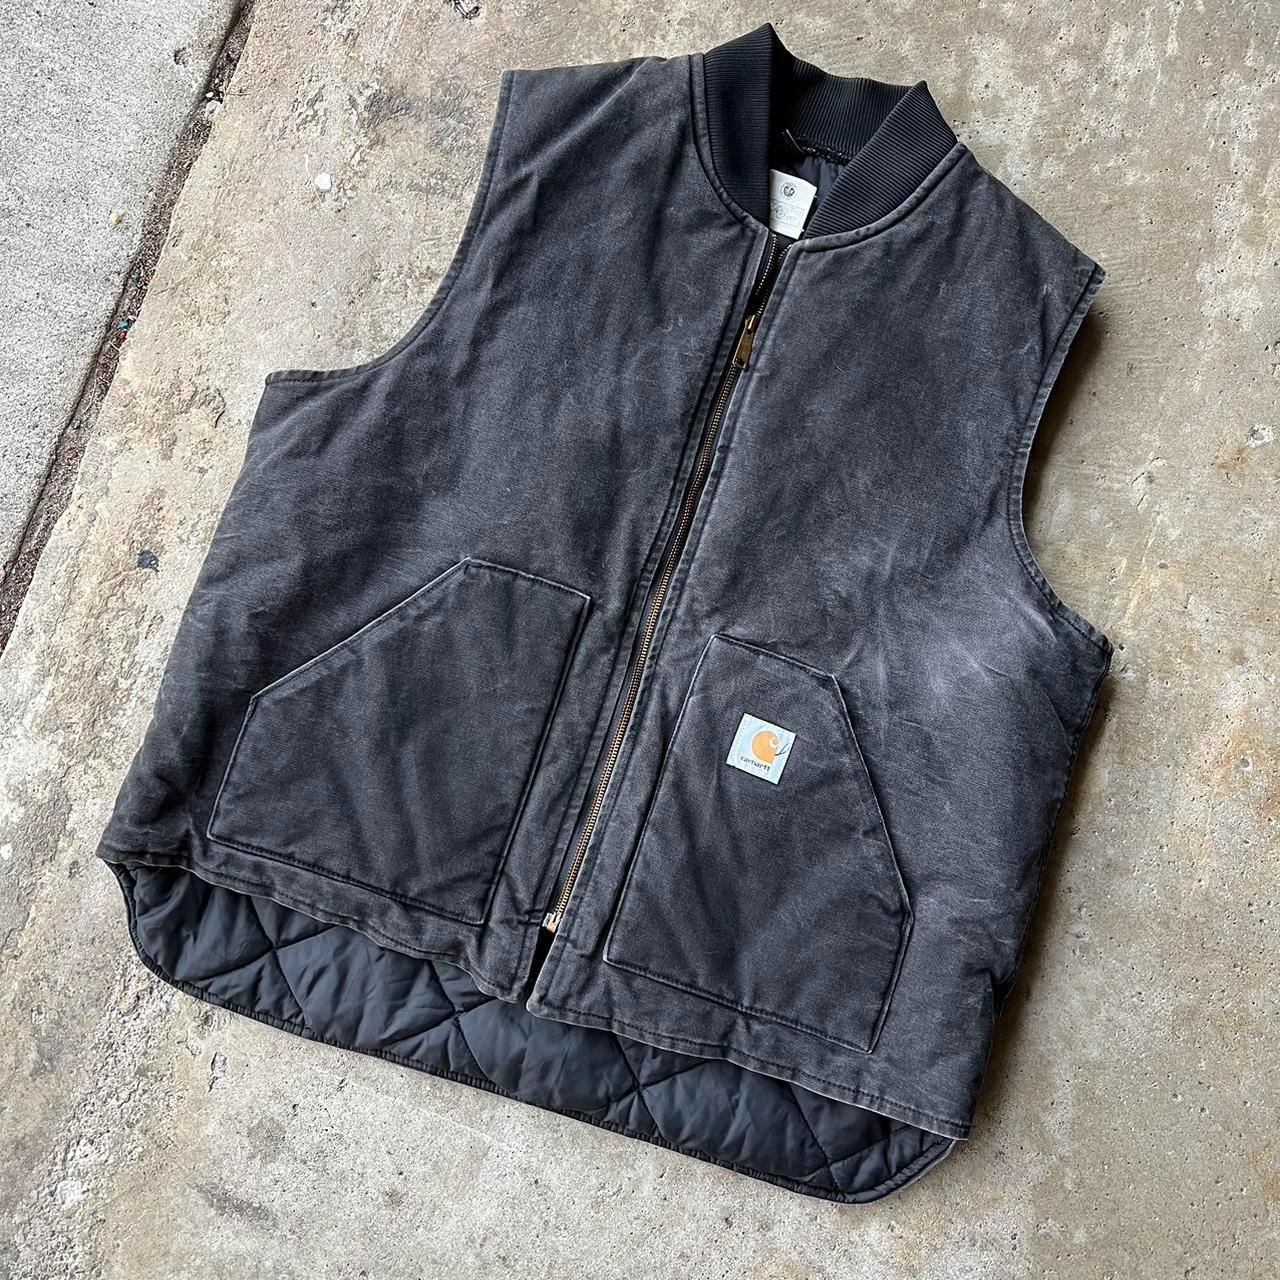 Vintage 90s Carhartt Faded Black Vest Size 2XL can... - Depop